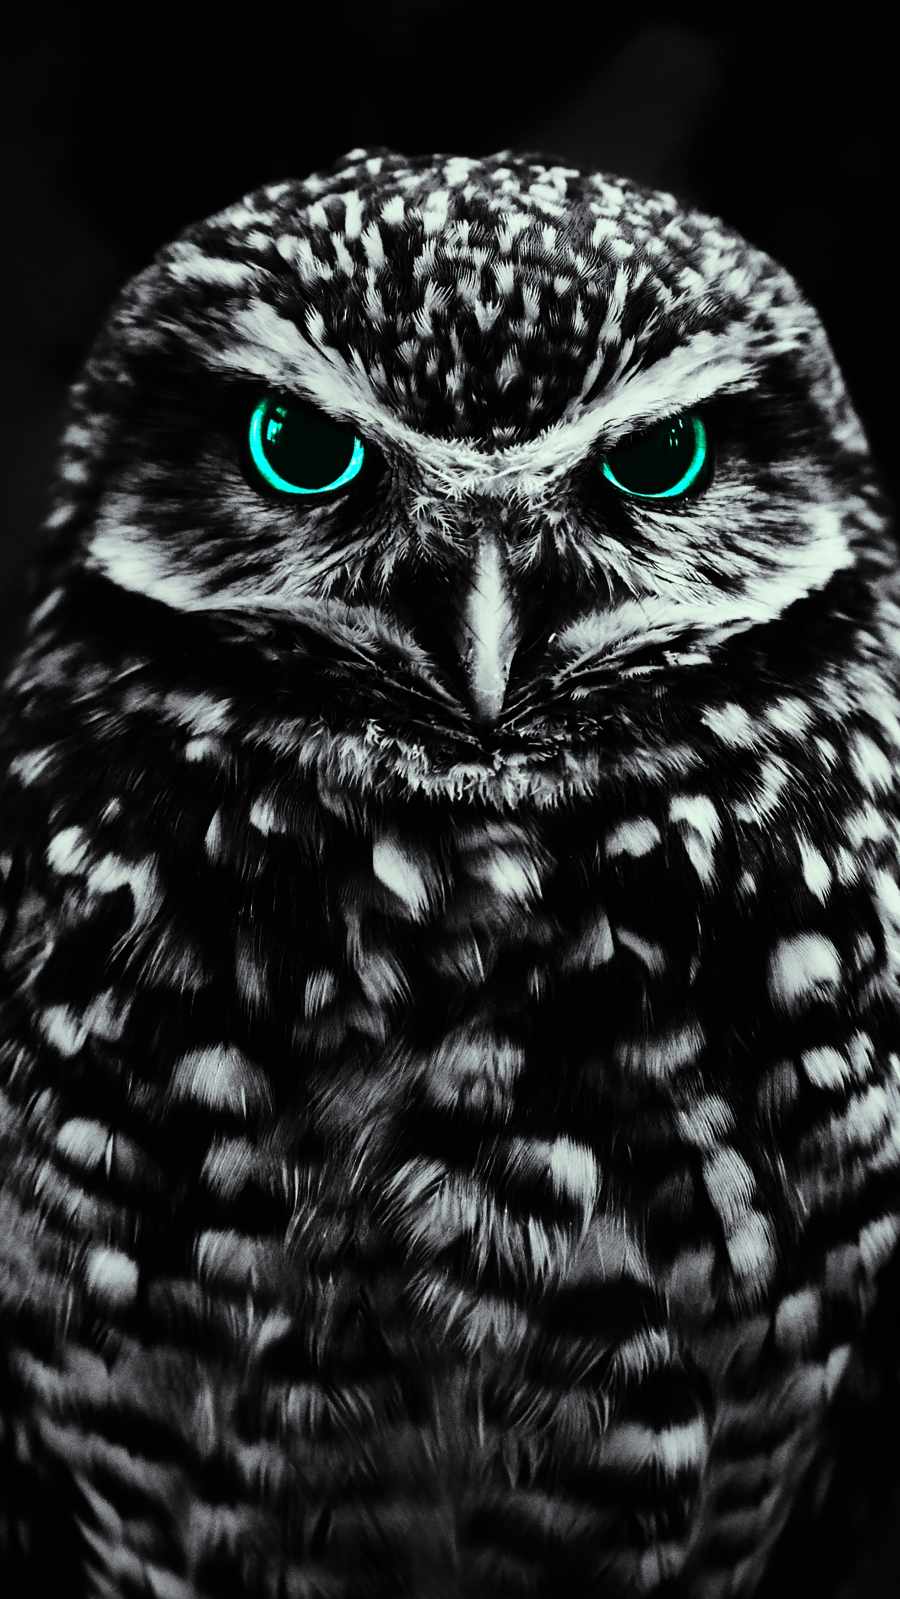 Black Owl IPhone Wallpaper - IPhone Wallpapers : iPhone Wallpapers